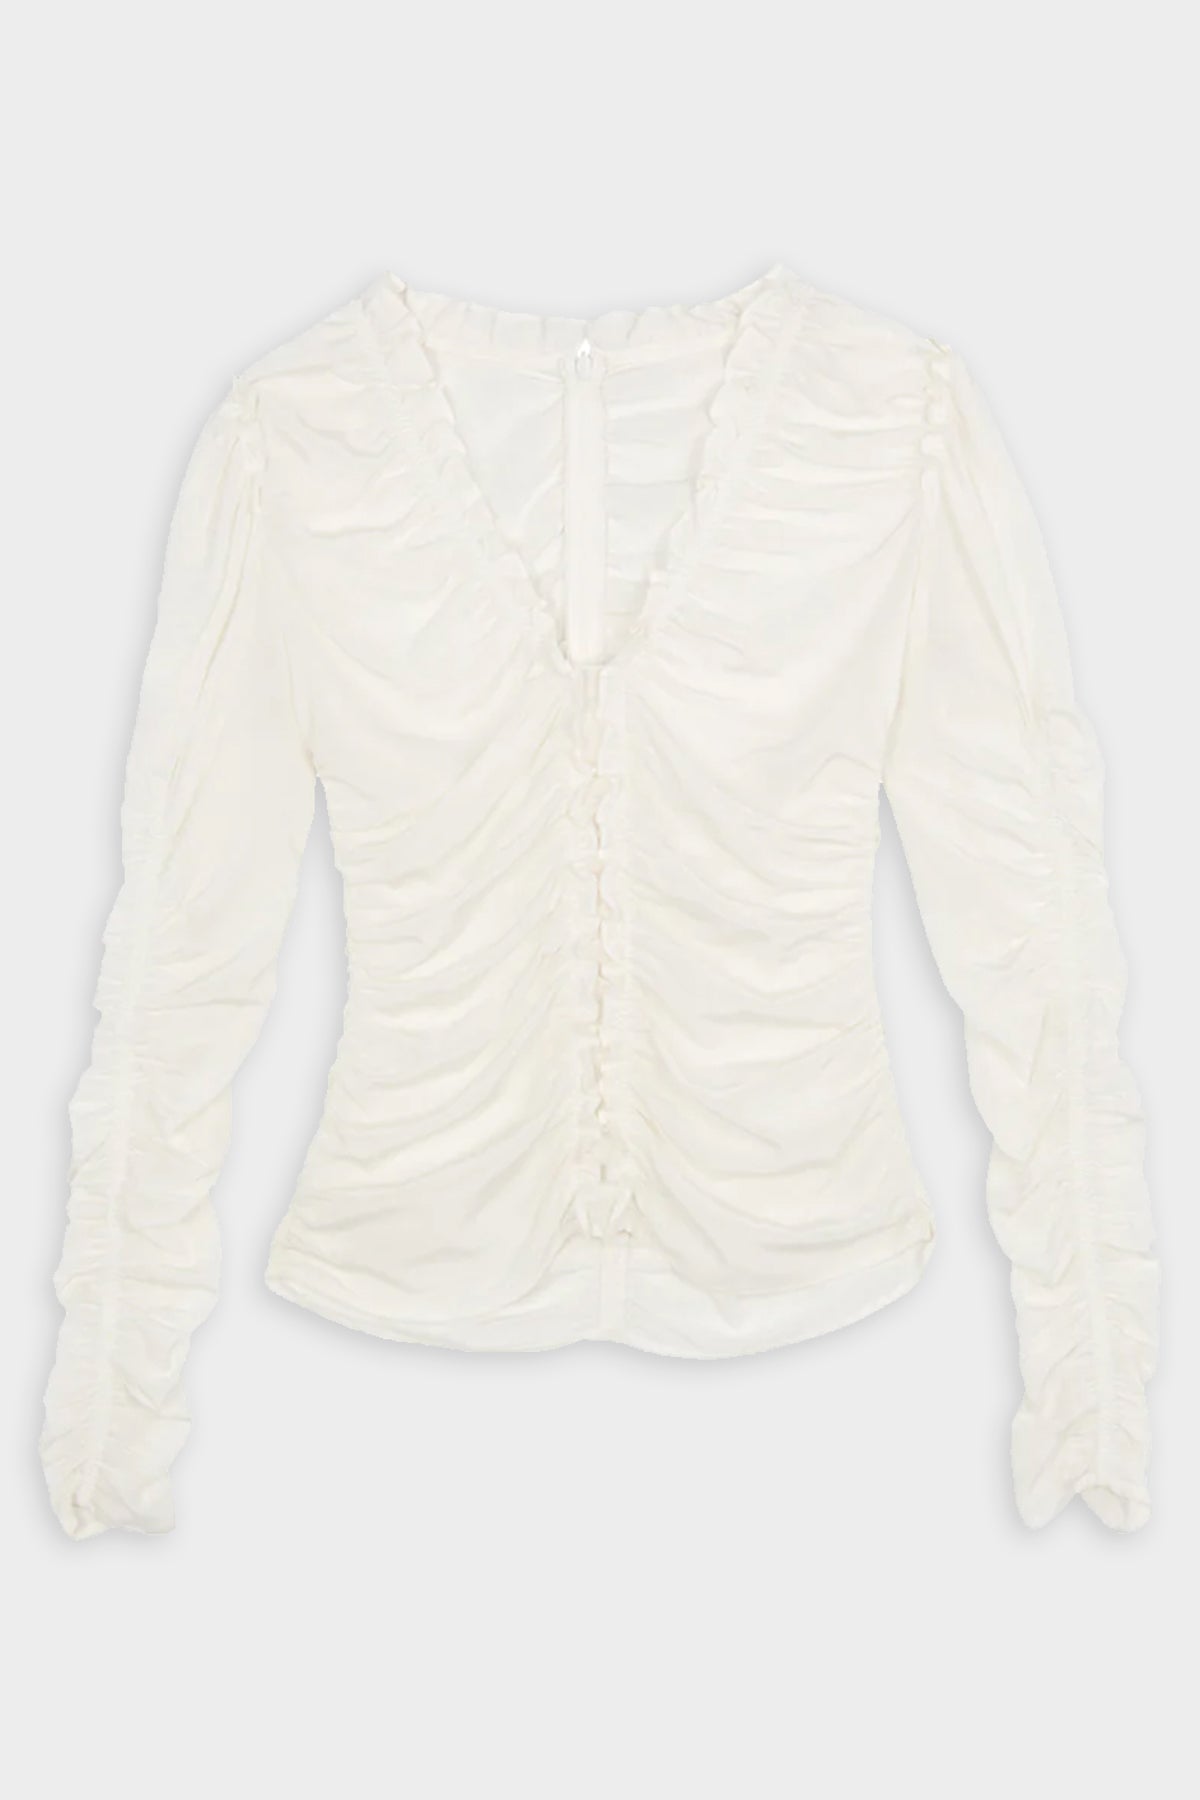 Beckett Silk Top in Whisper White - shop-olivia.com